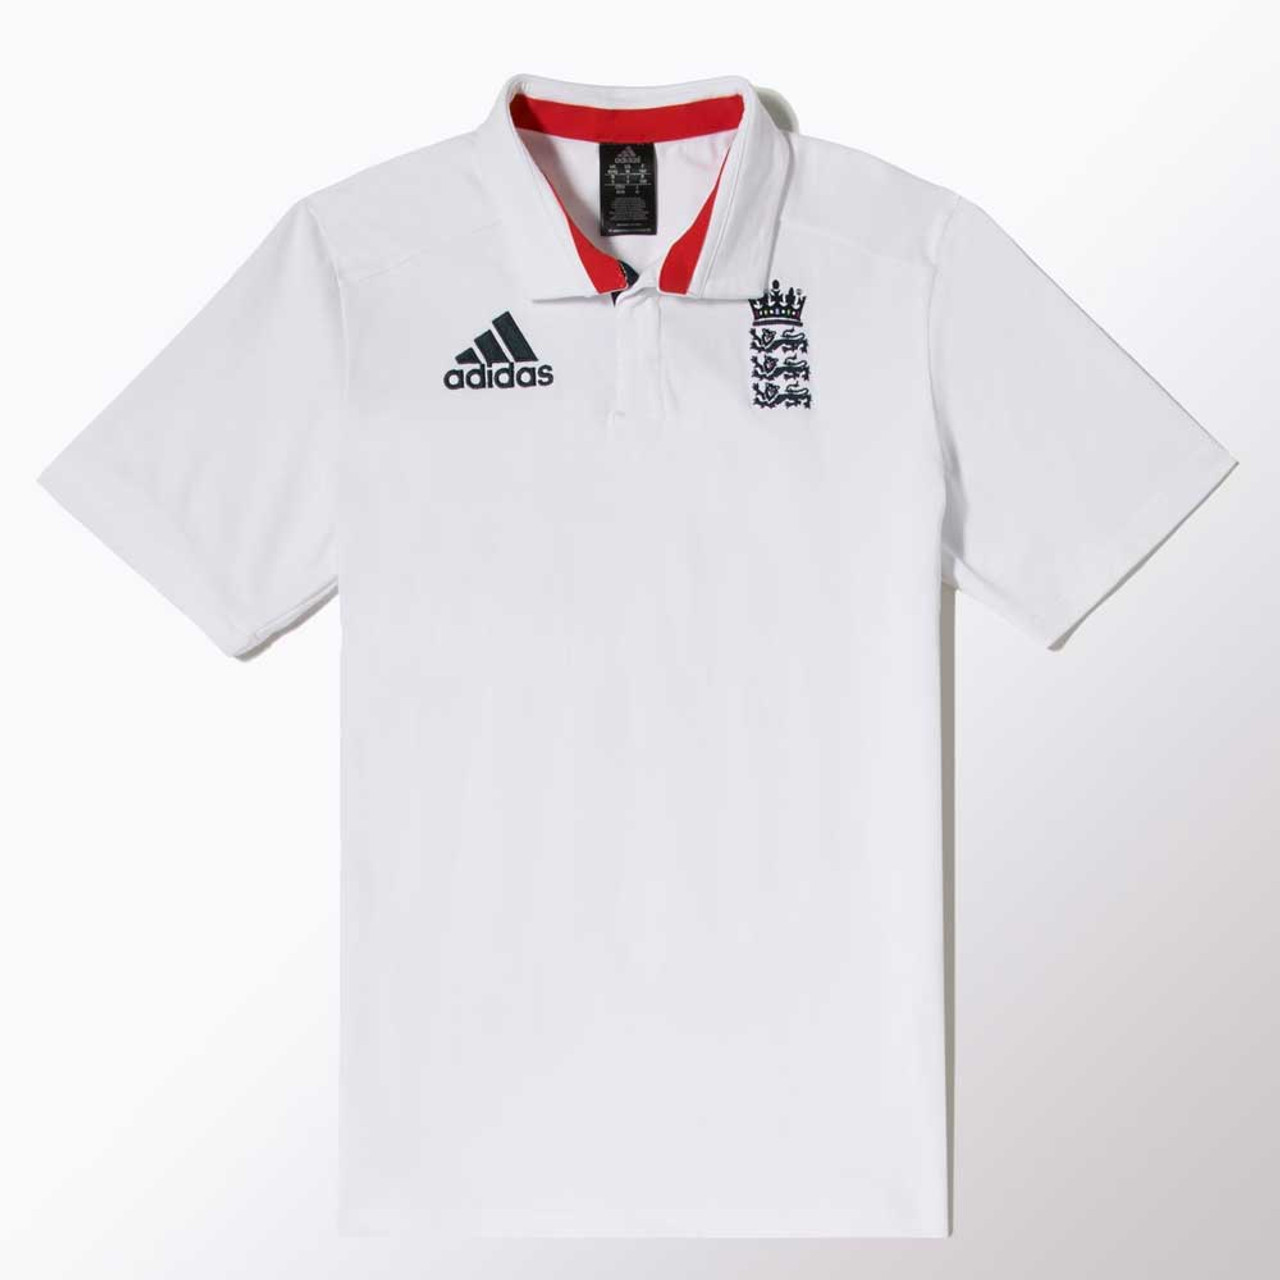 ADIDAS england cricket test supporter shirt